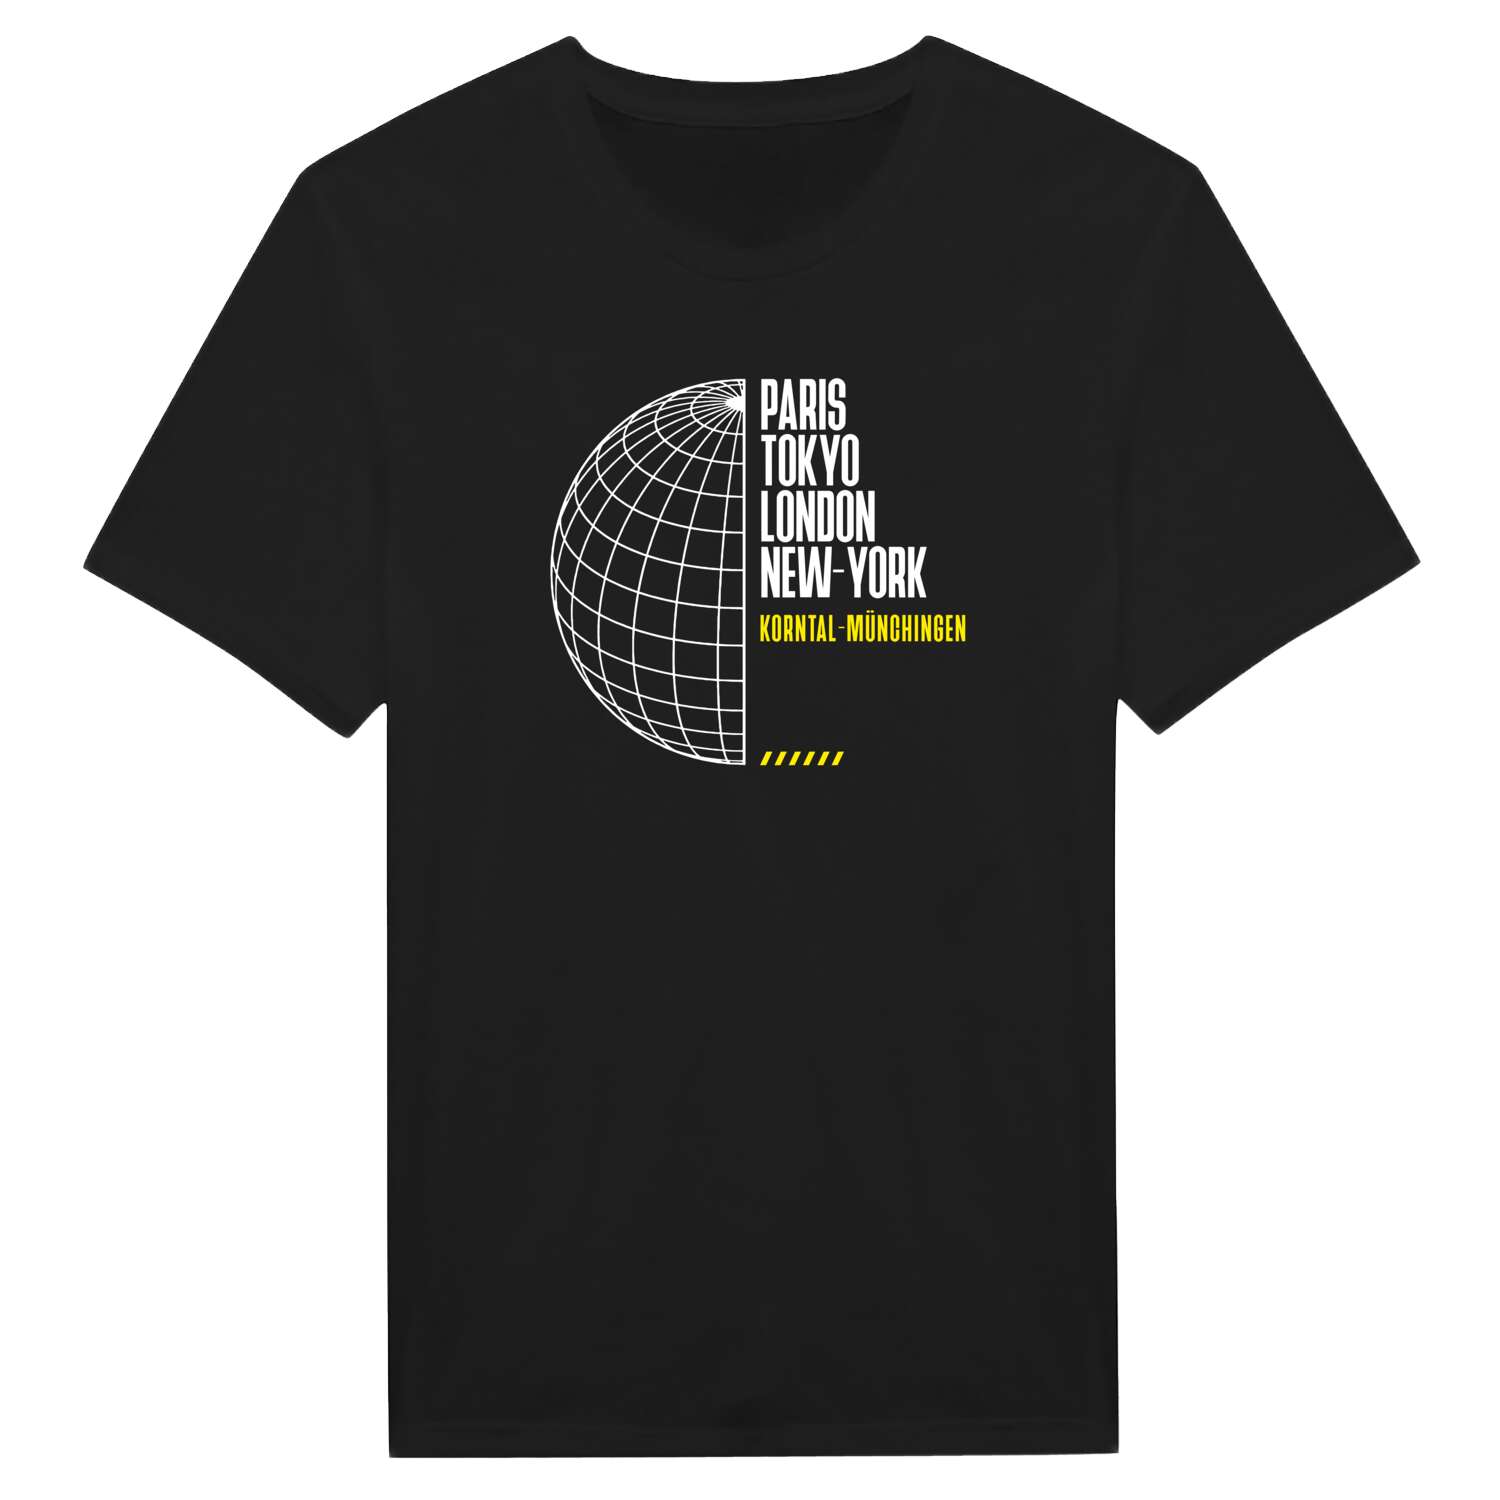 Korntal-Münchingen T-Shirt »Paris Tokyo London«